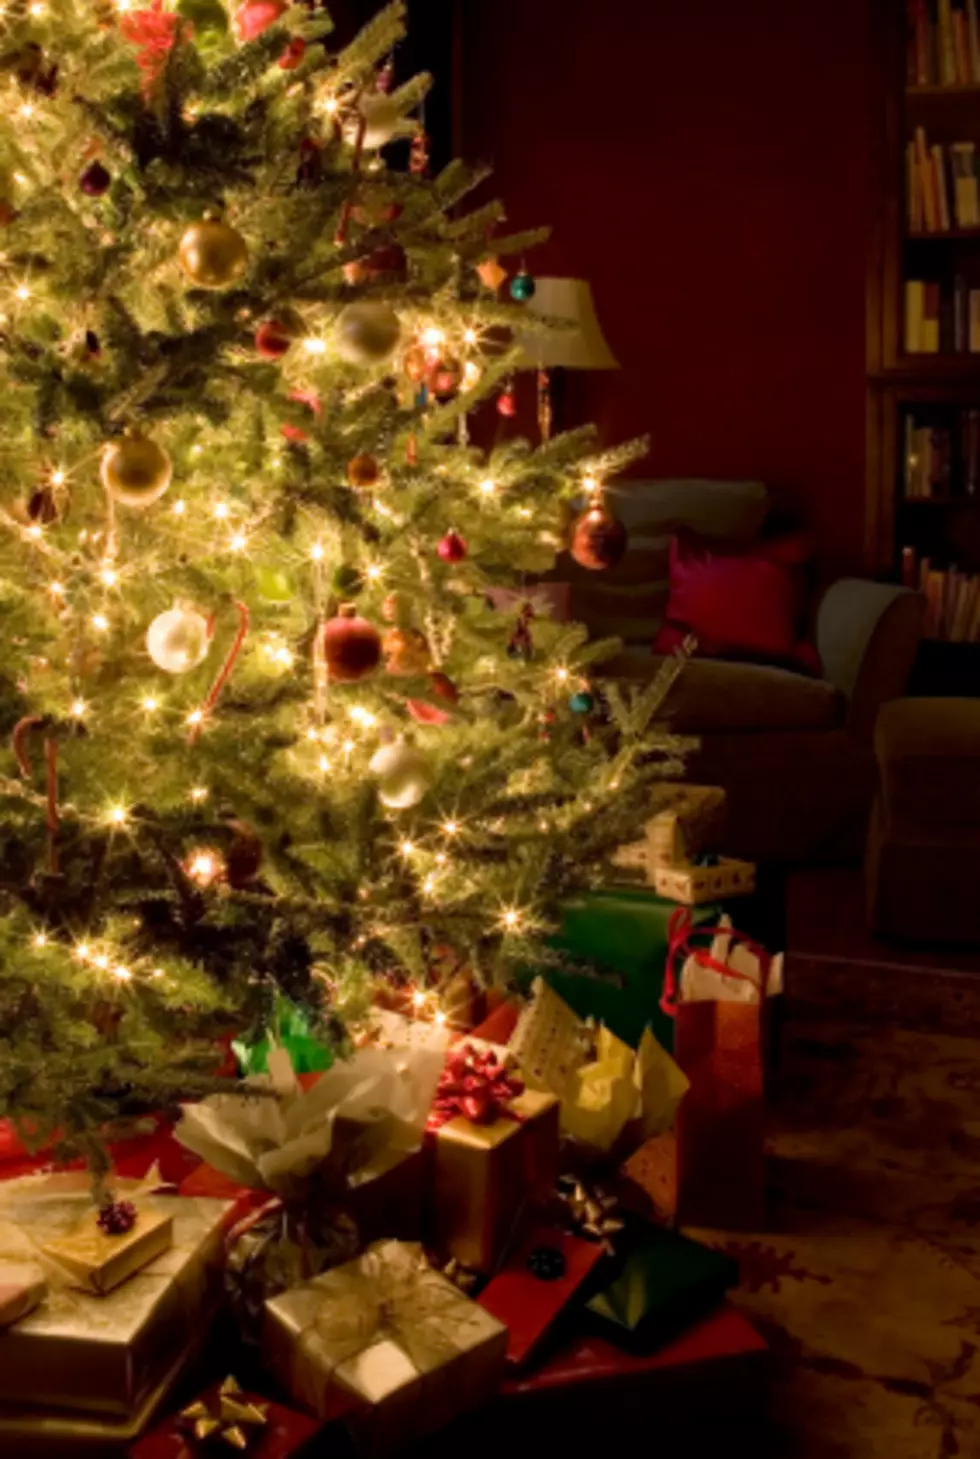 History Of The Christmas Tree